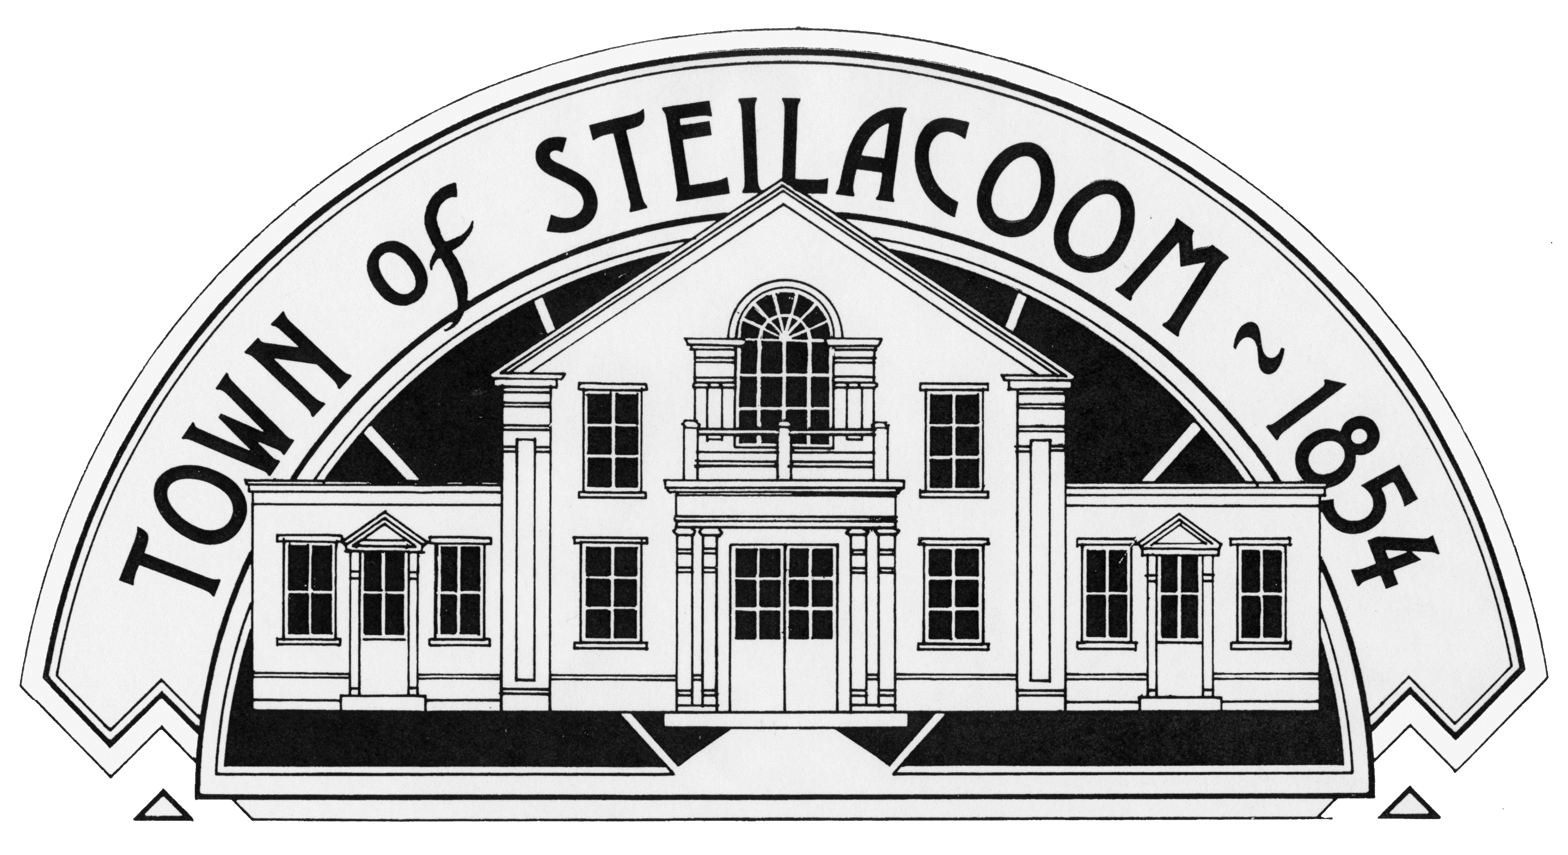 Town of Steilacoom, WA